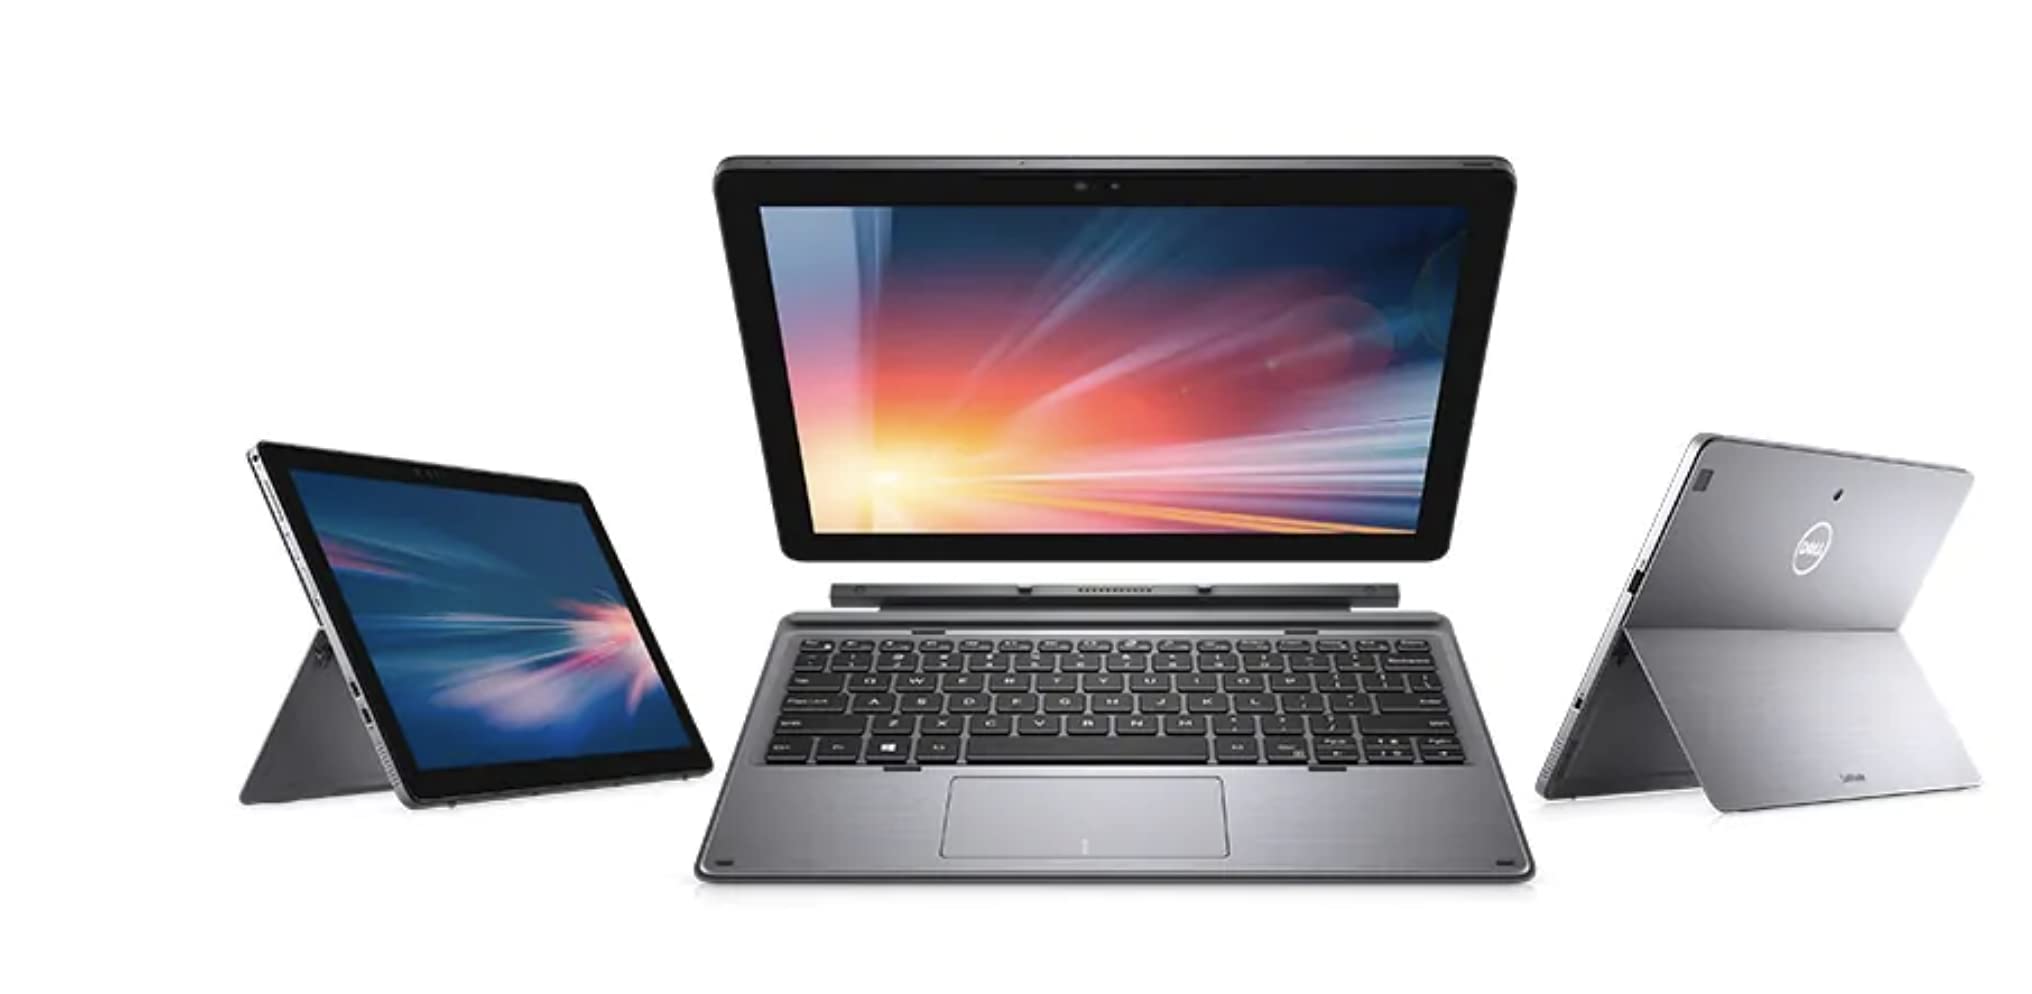 Dell Latitude 7200 Tablet - 12.3" - 16GB RAM - 512GB SSD - Windows 10 Pro 64-bit